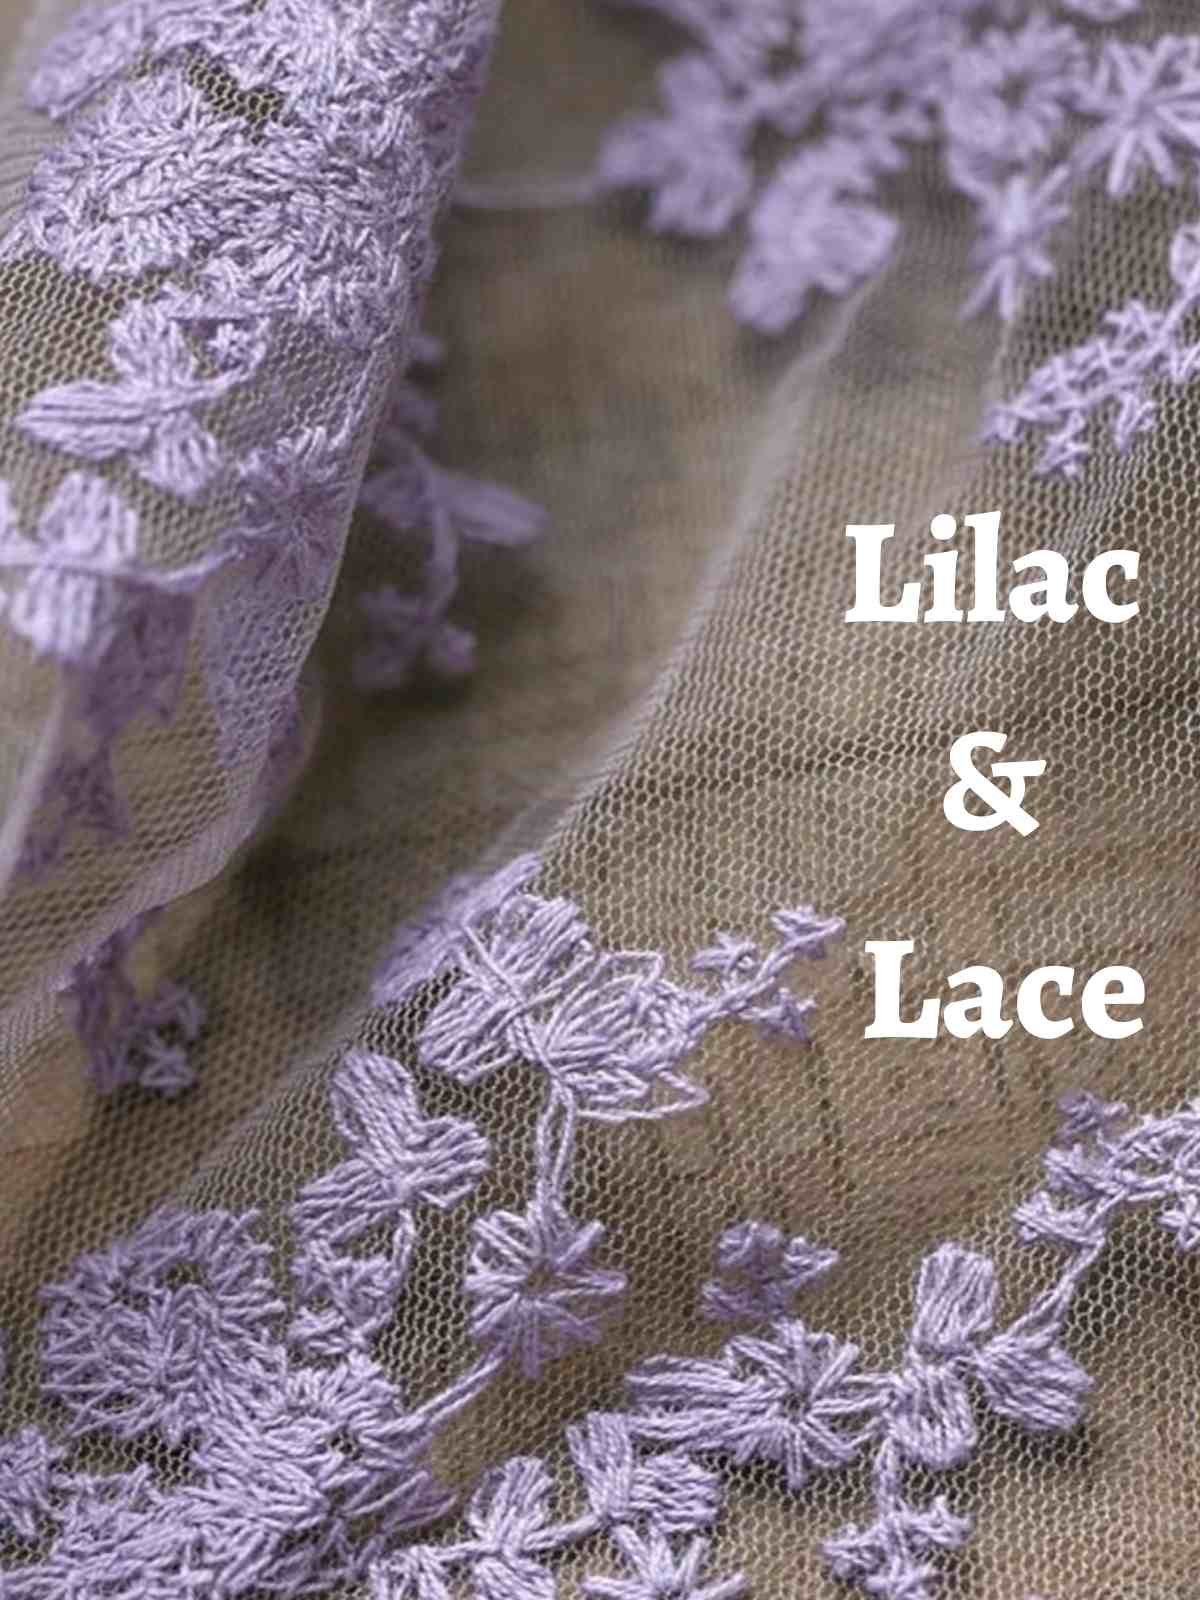 Lilac & lace thread